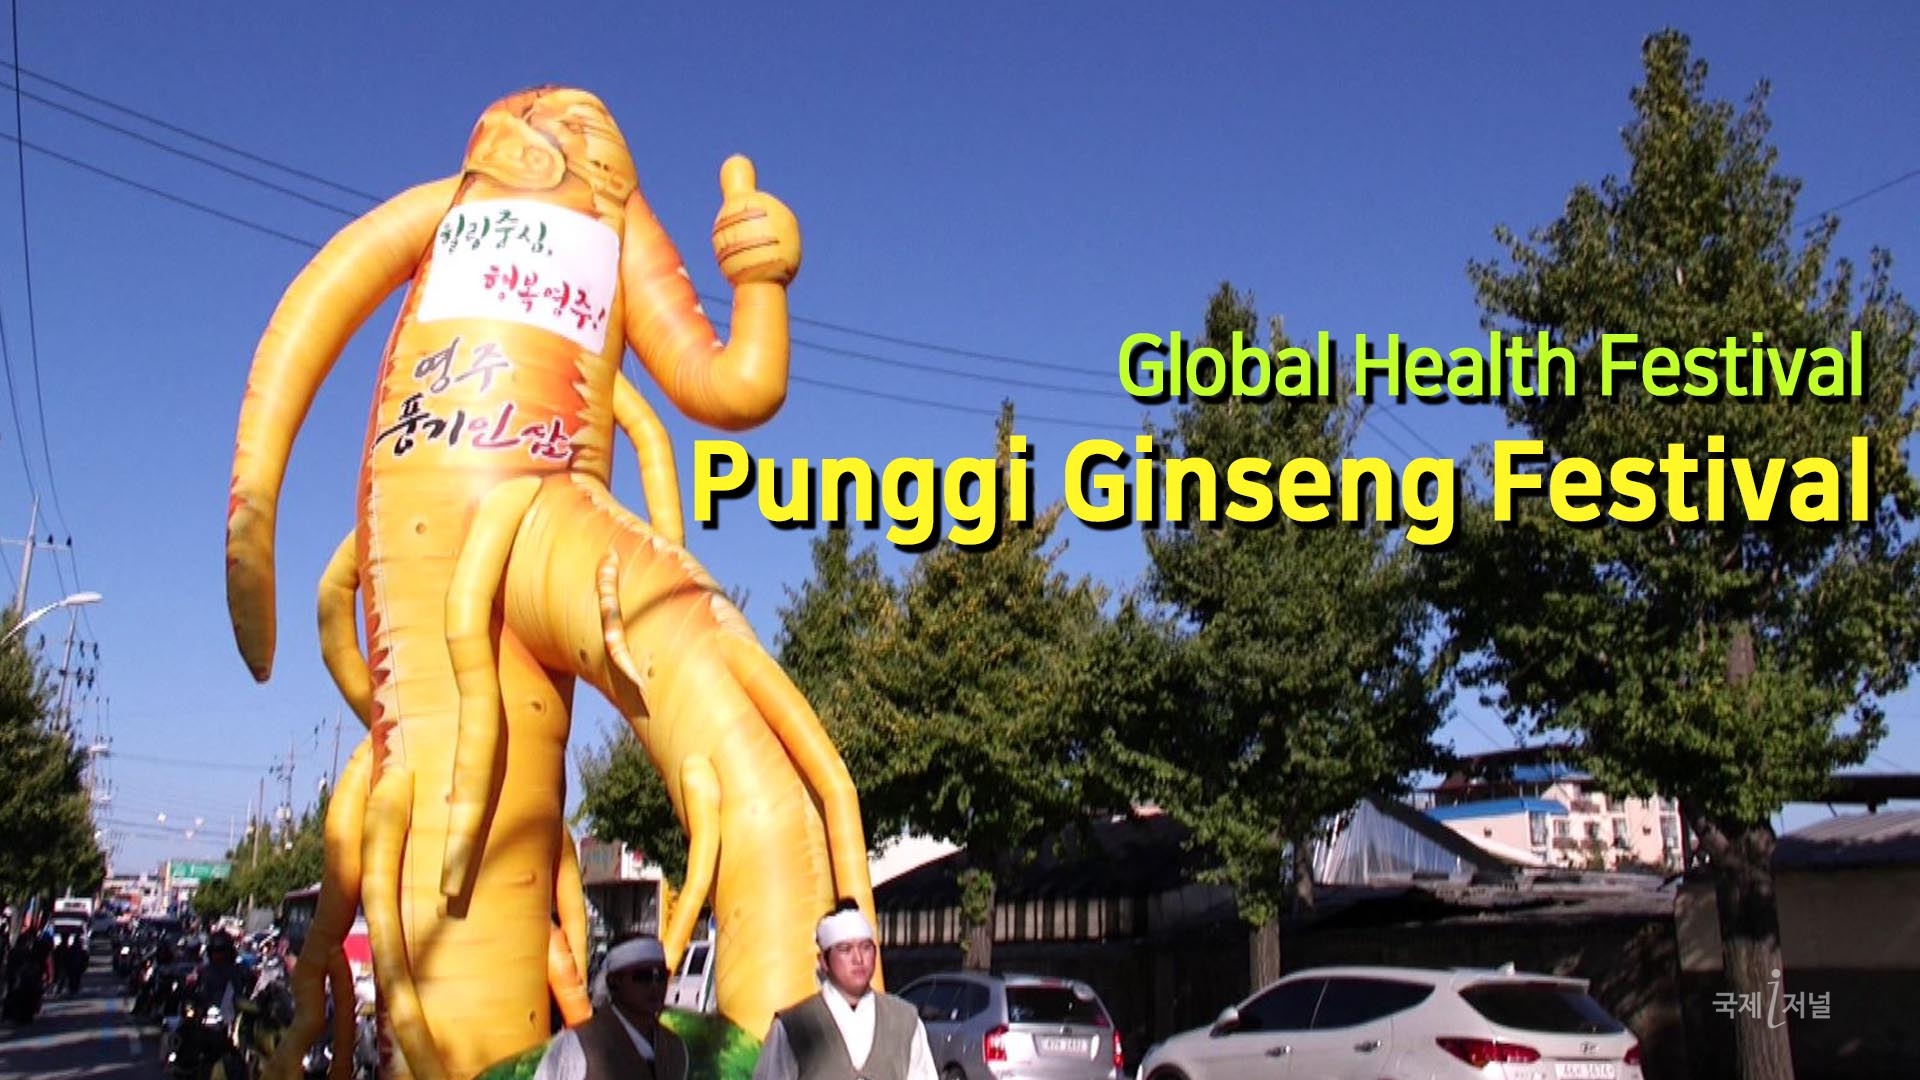 Punggi Ginseng Festival held in Gyeongbuk Province